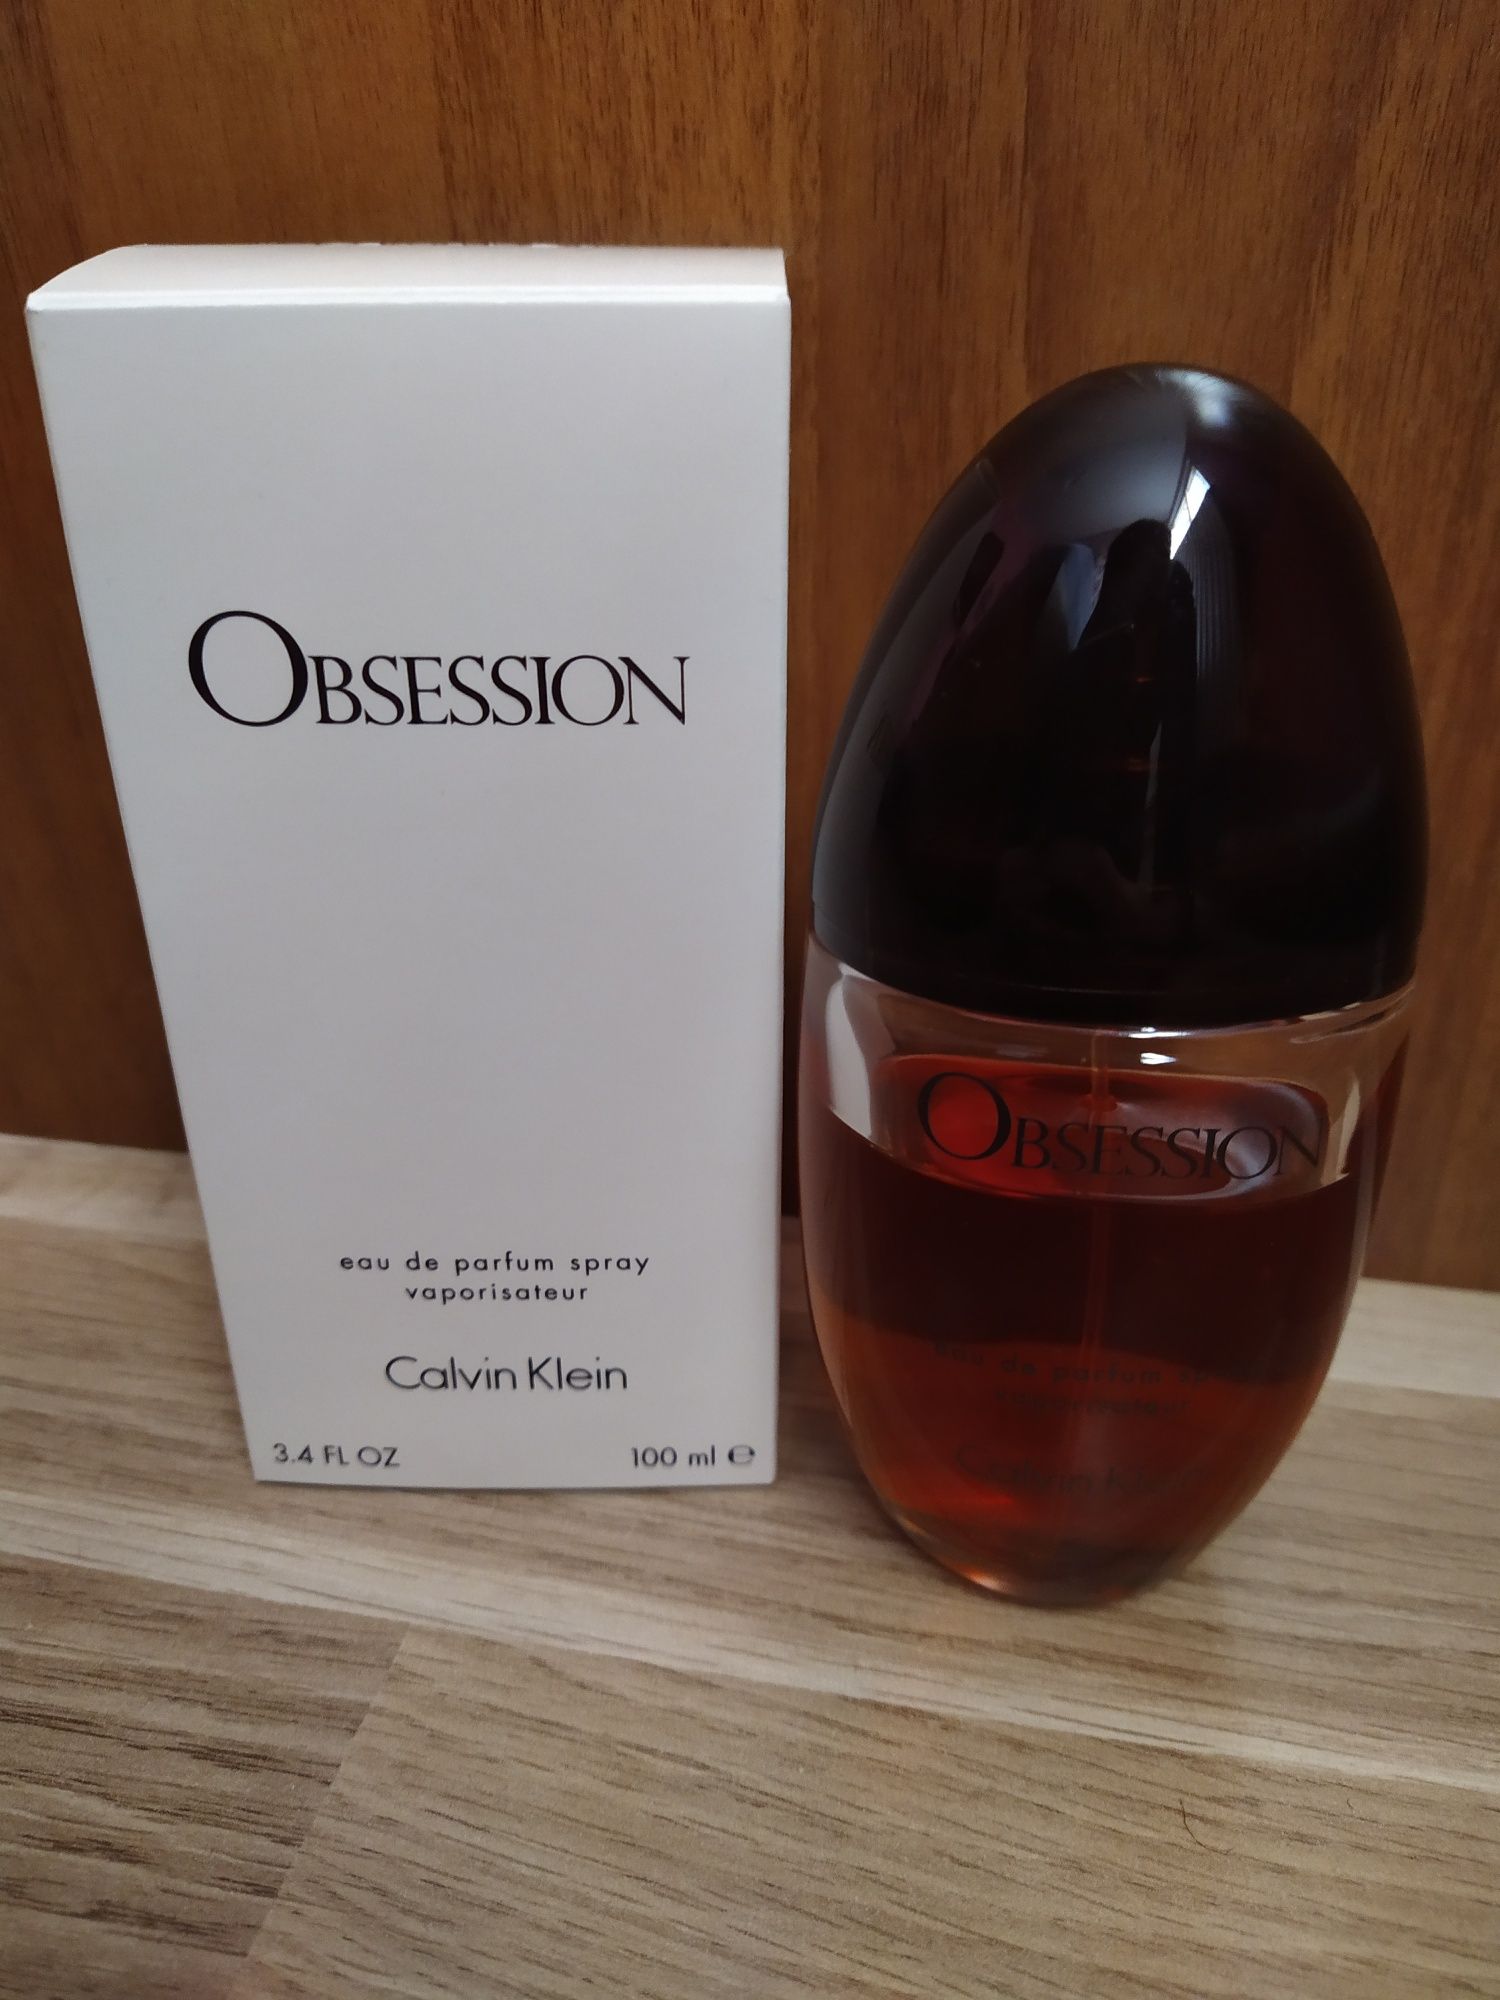 Парфюм Келвин Клайн 100 мл. / Calvin Klein Obsession 100 ml.